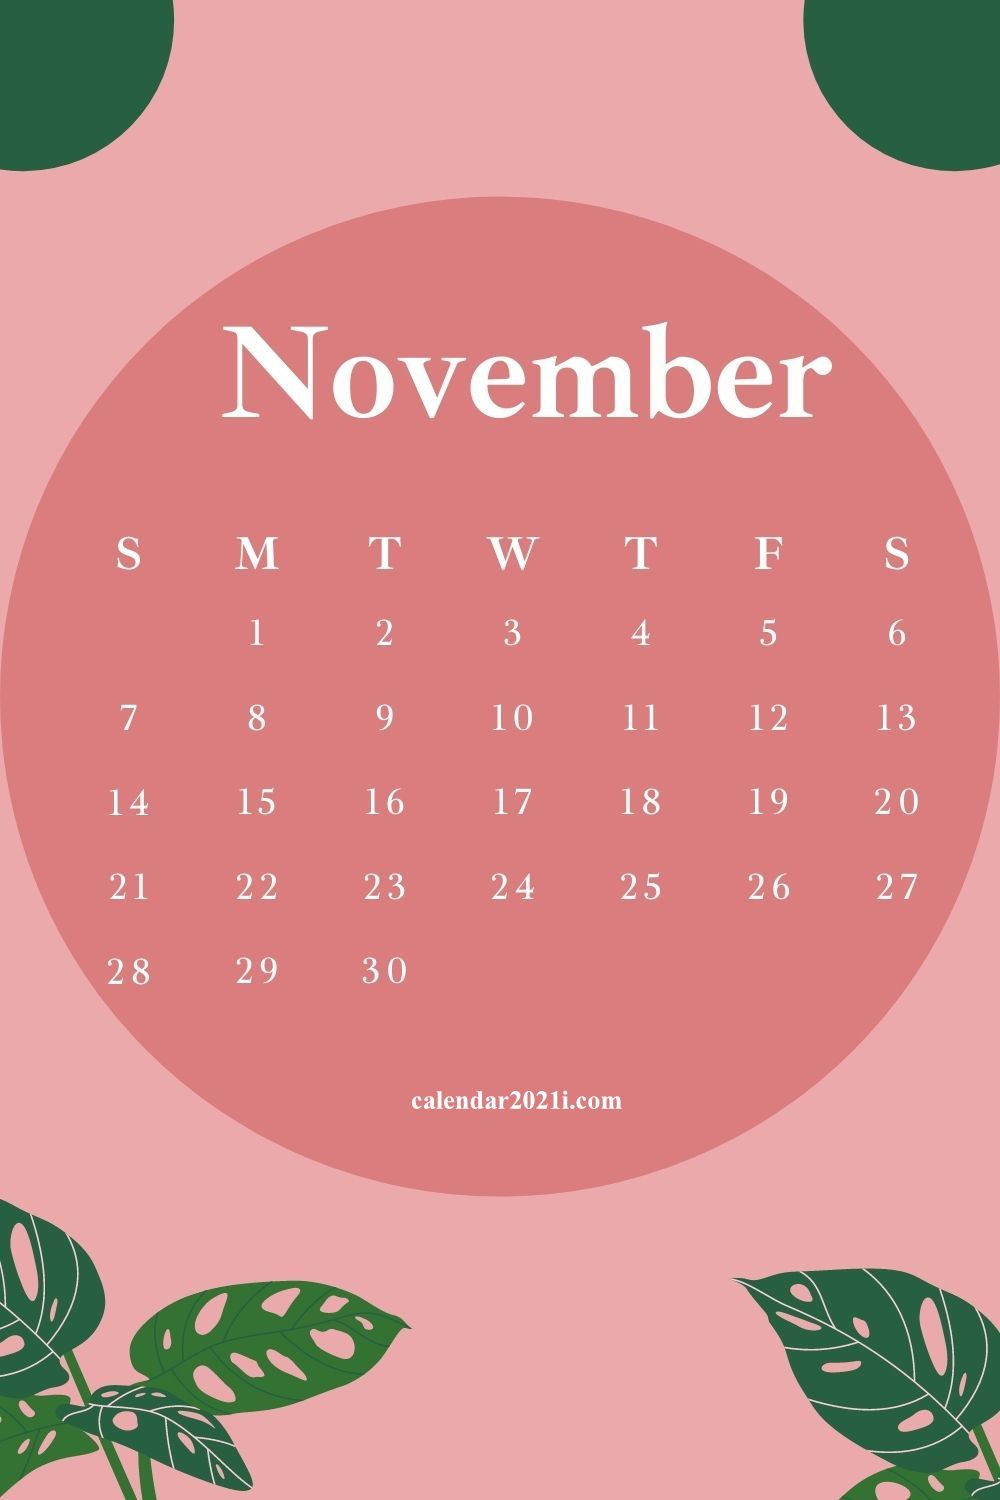 November 2021 Calendar Printable Planners | Calendar 2021 November 2021 Moon Phase Calendar